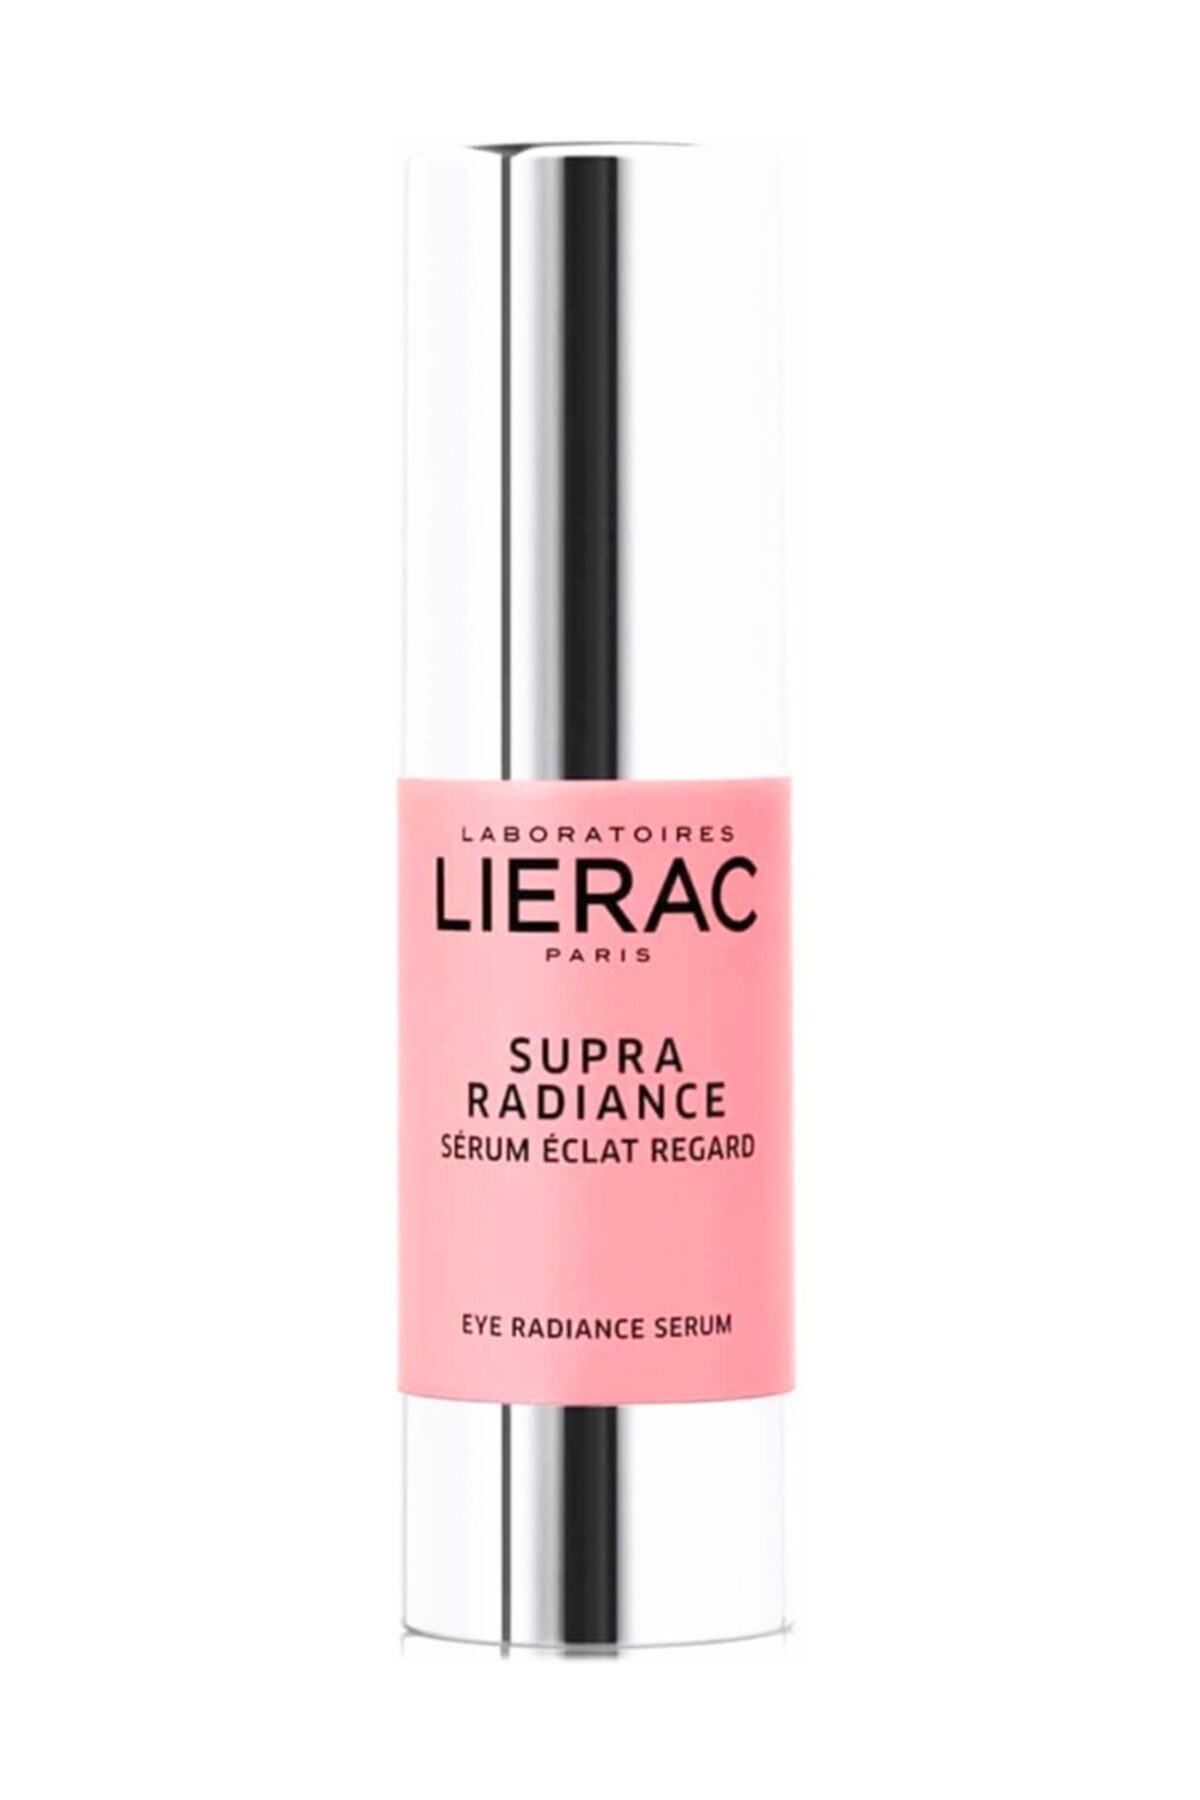 Lierac Paris Supra Radiance Eye Radiance Serum 15 ml